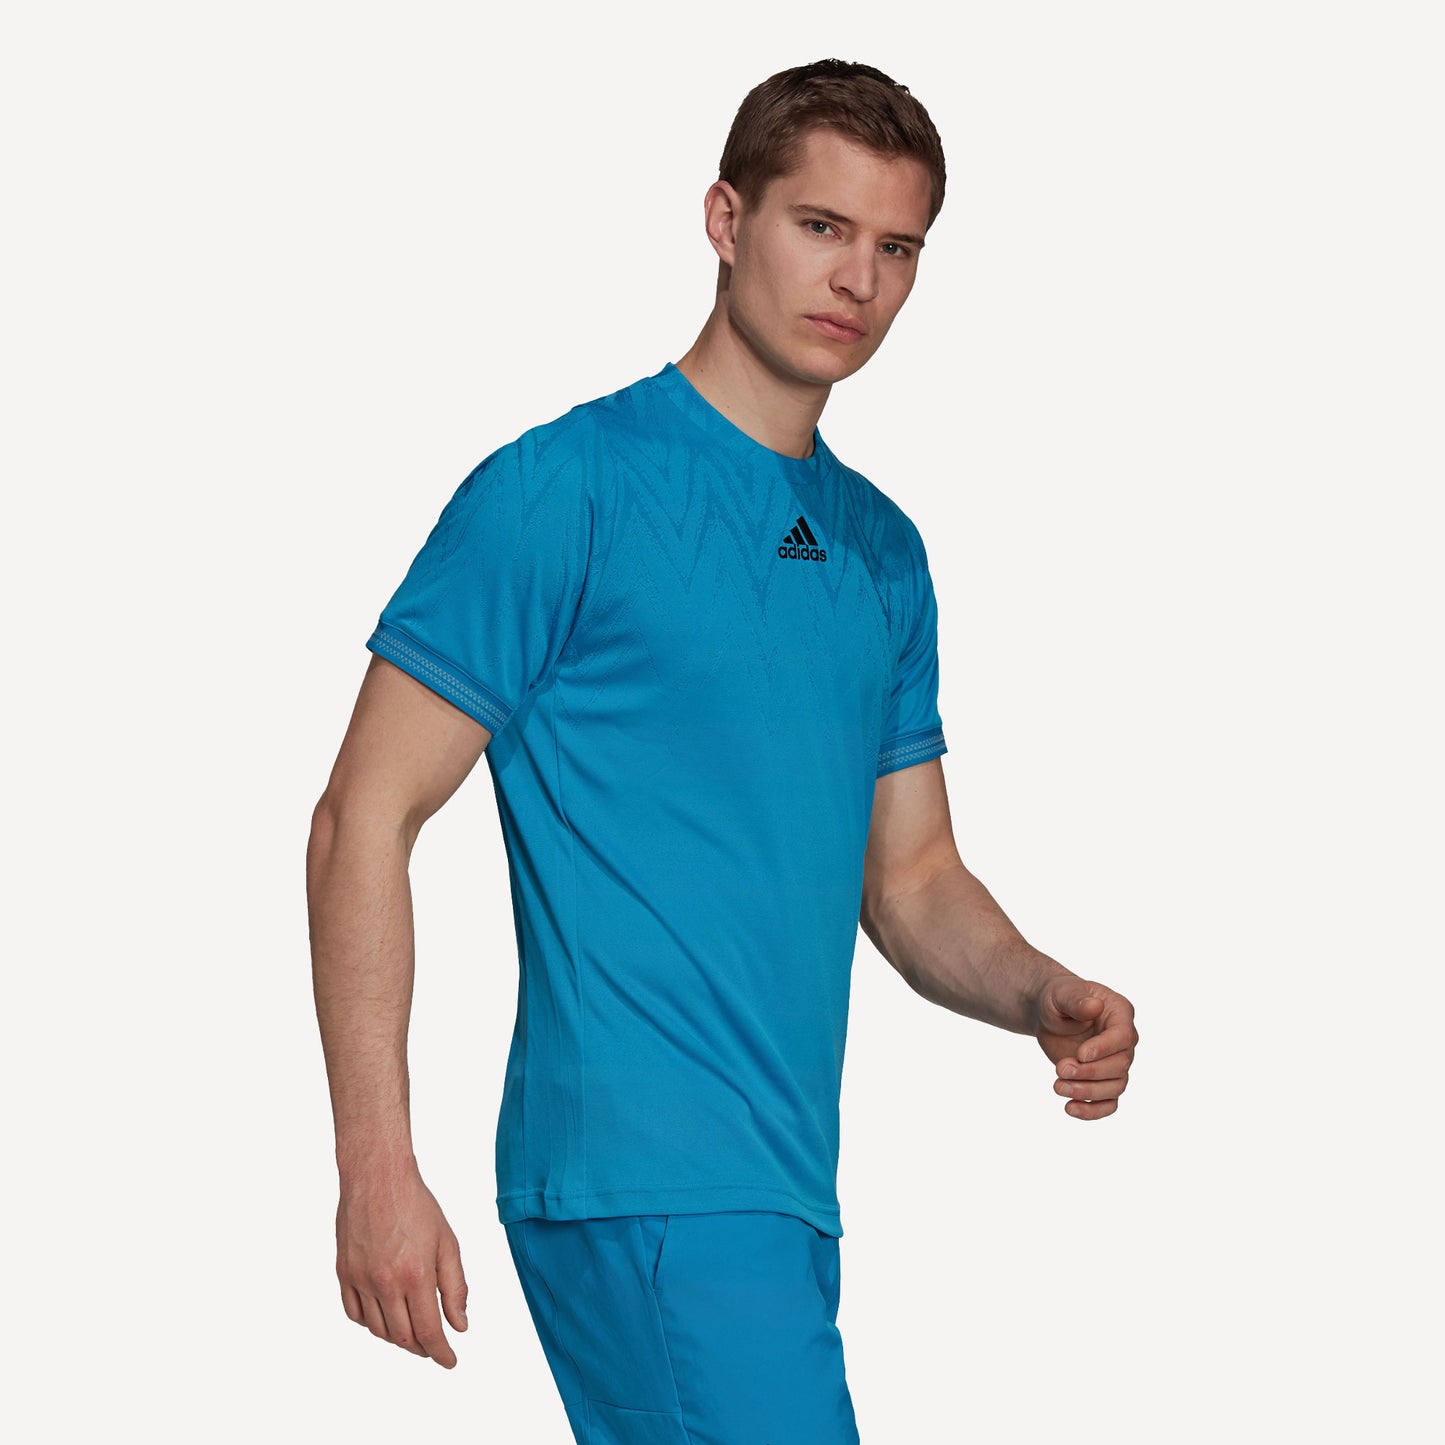 adidas Freelift Primeblue Men's Tennis Shirt Blue (3)